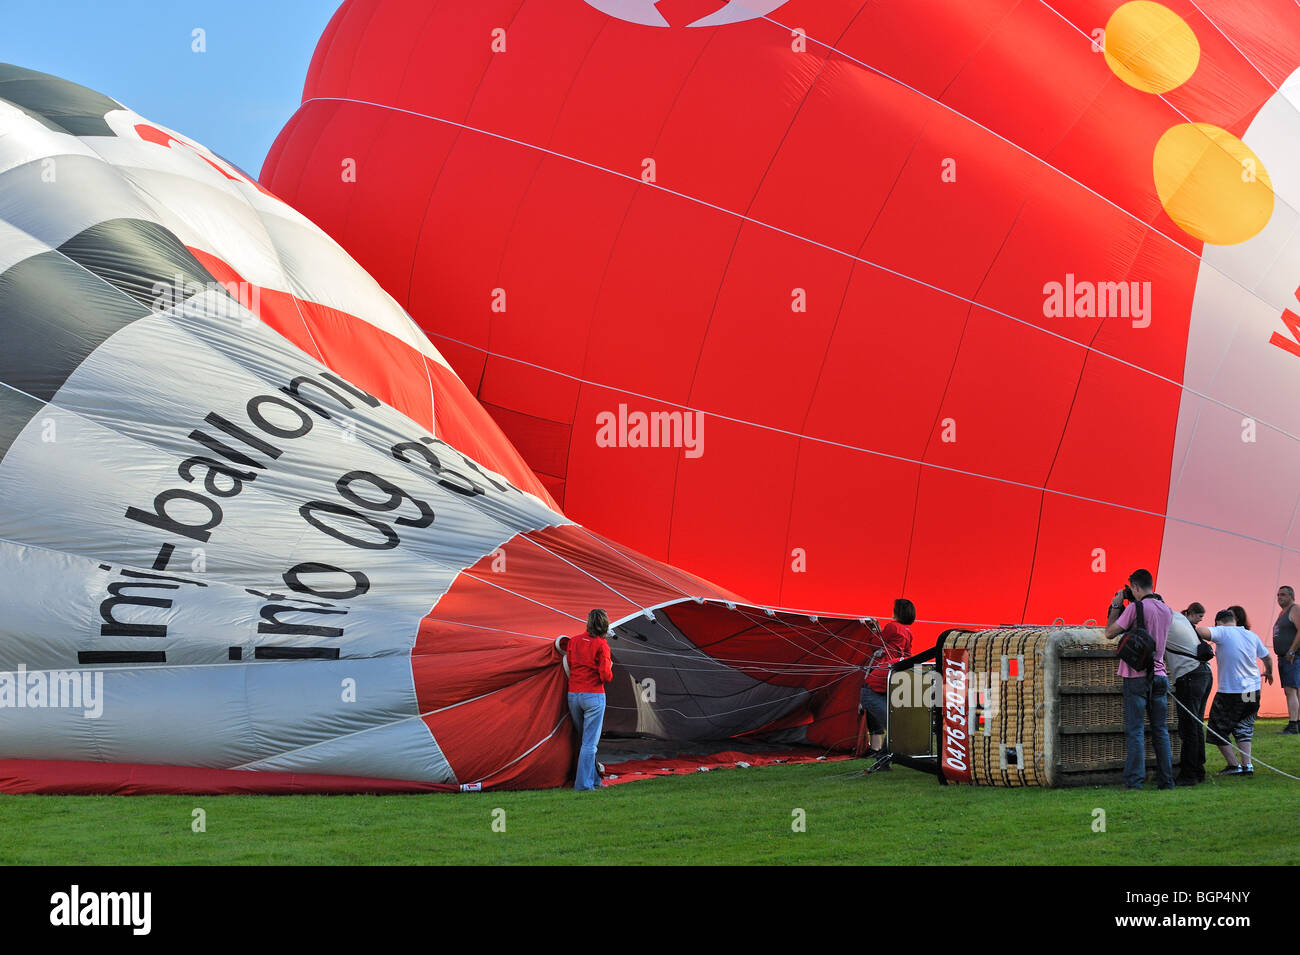 Hot air balloonists / Aeronauts preparing and inflating hot-air balloon with propane burners during ballooning meeting, Belgium Stock Photo